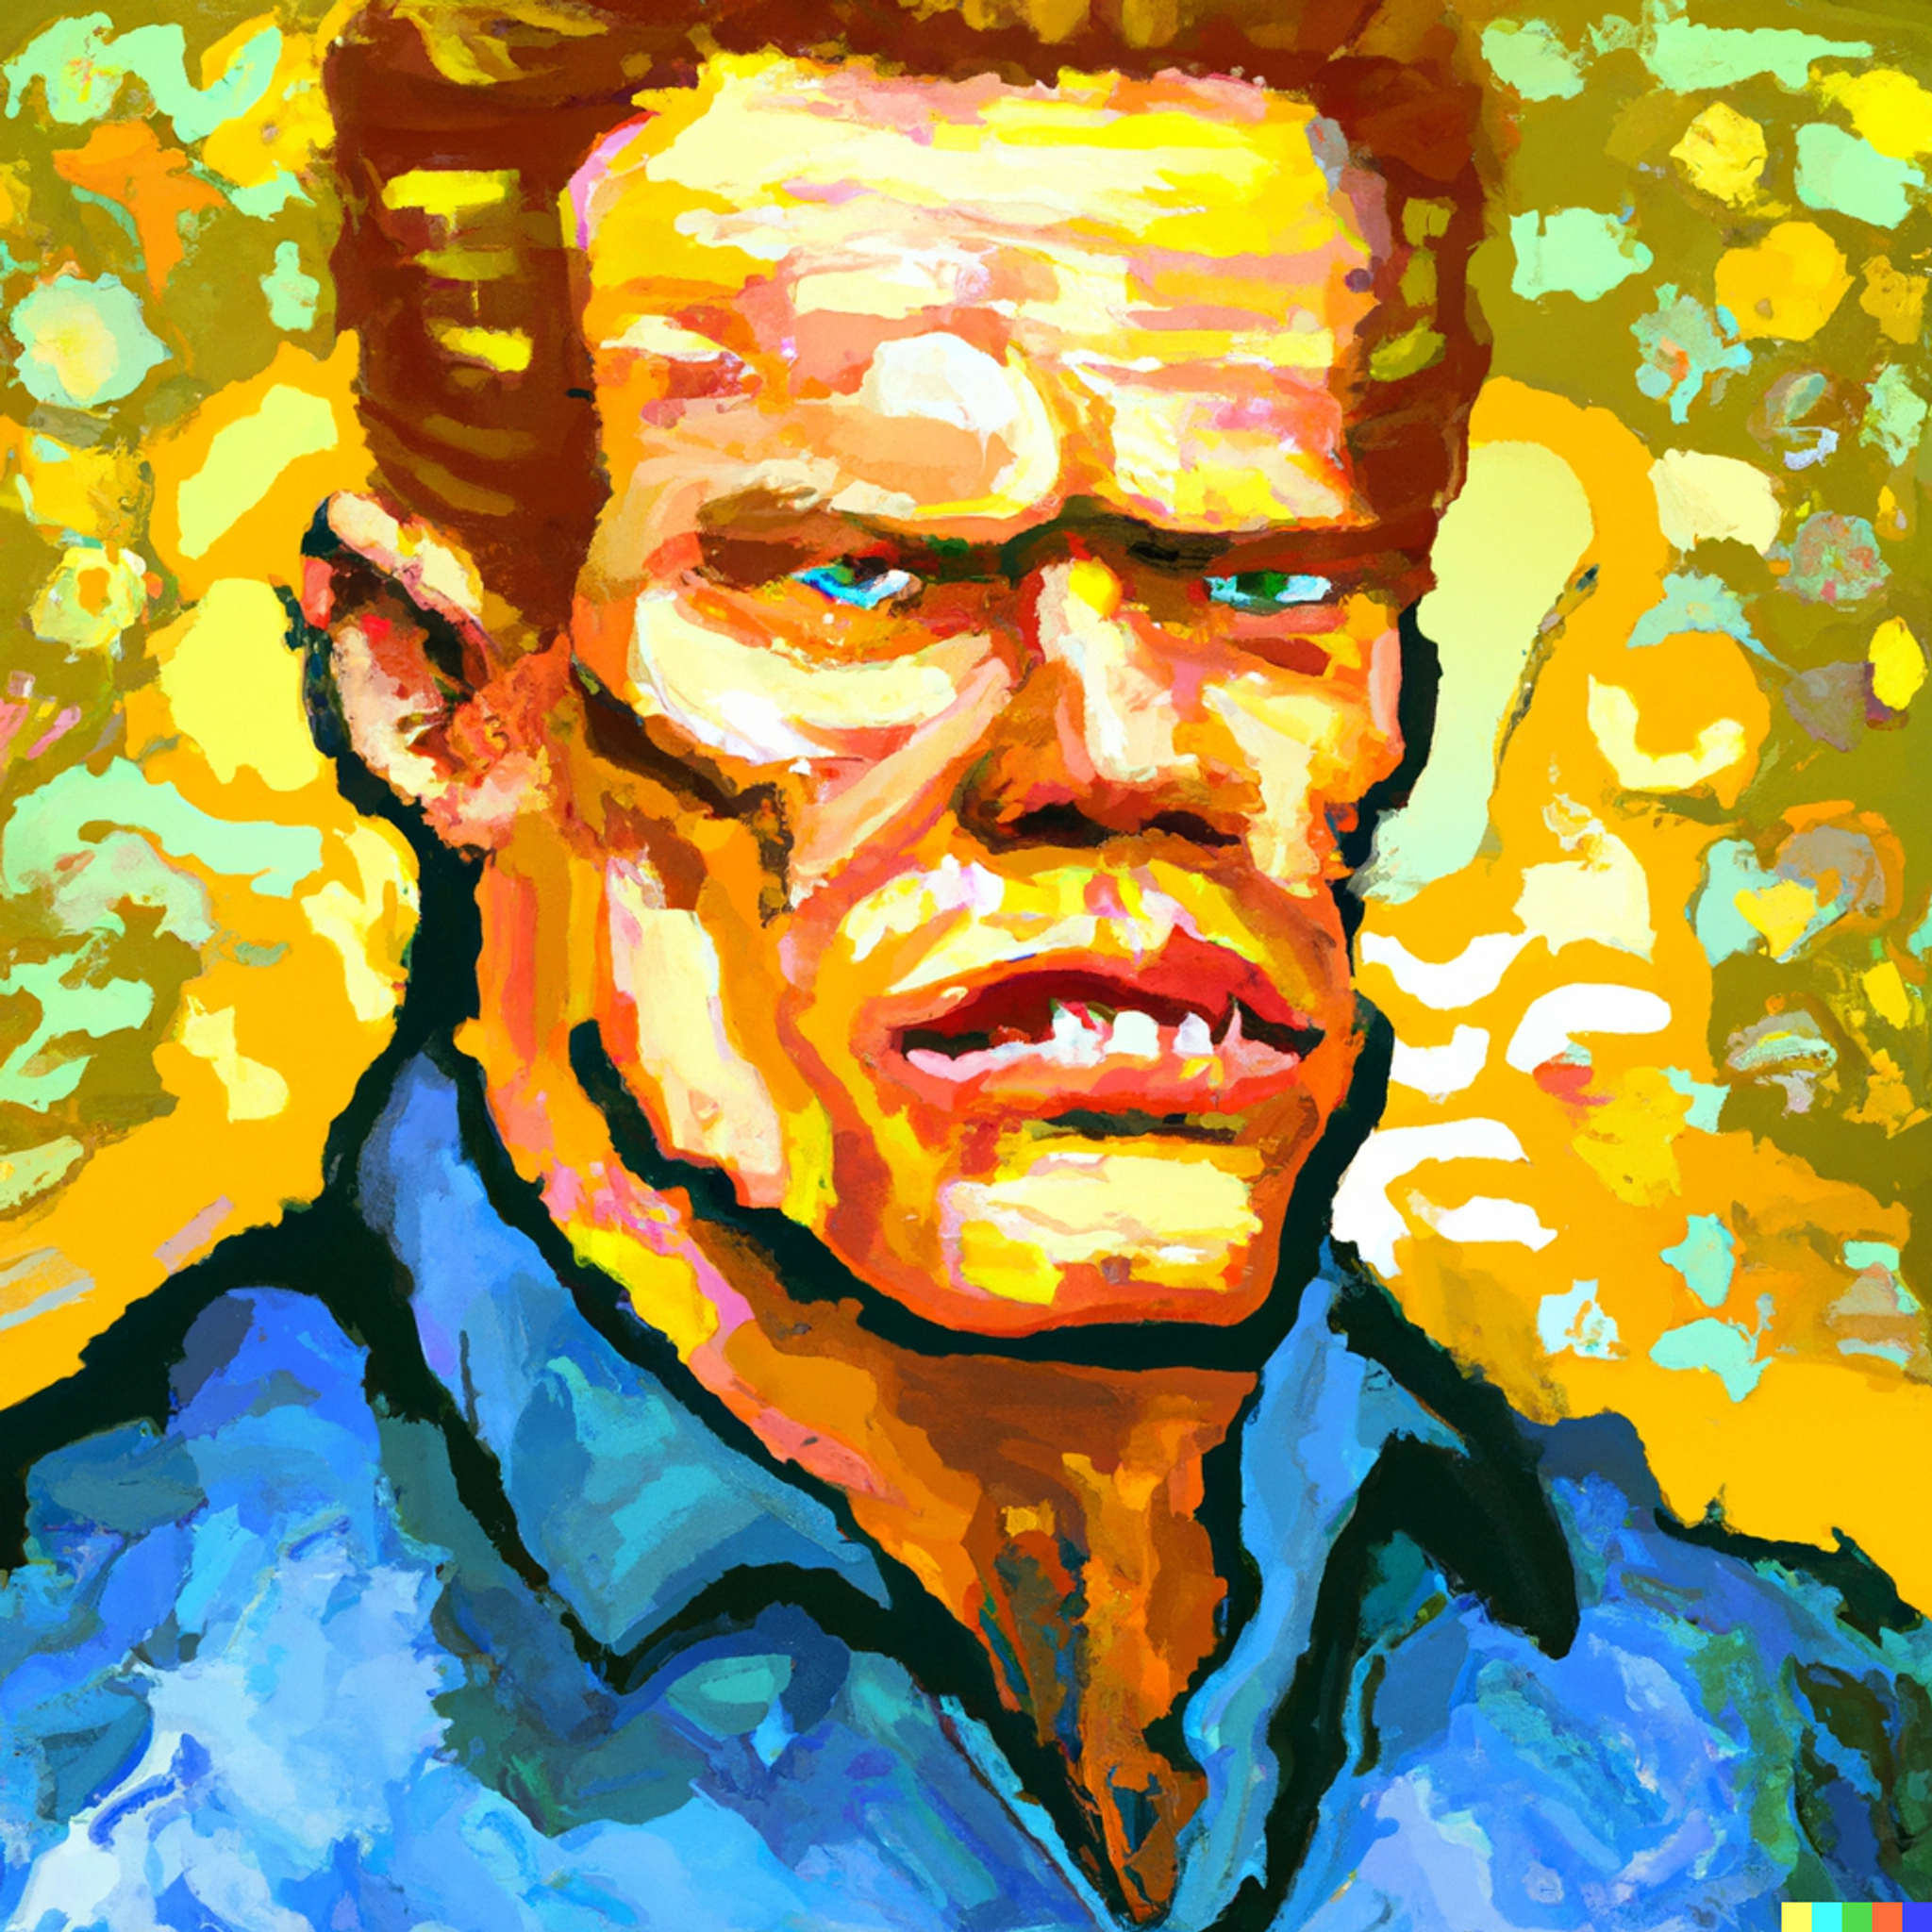 A portrait of Arnold Schwarzeneggar in the style of Vincent Van Gogh